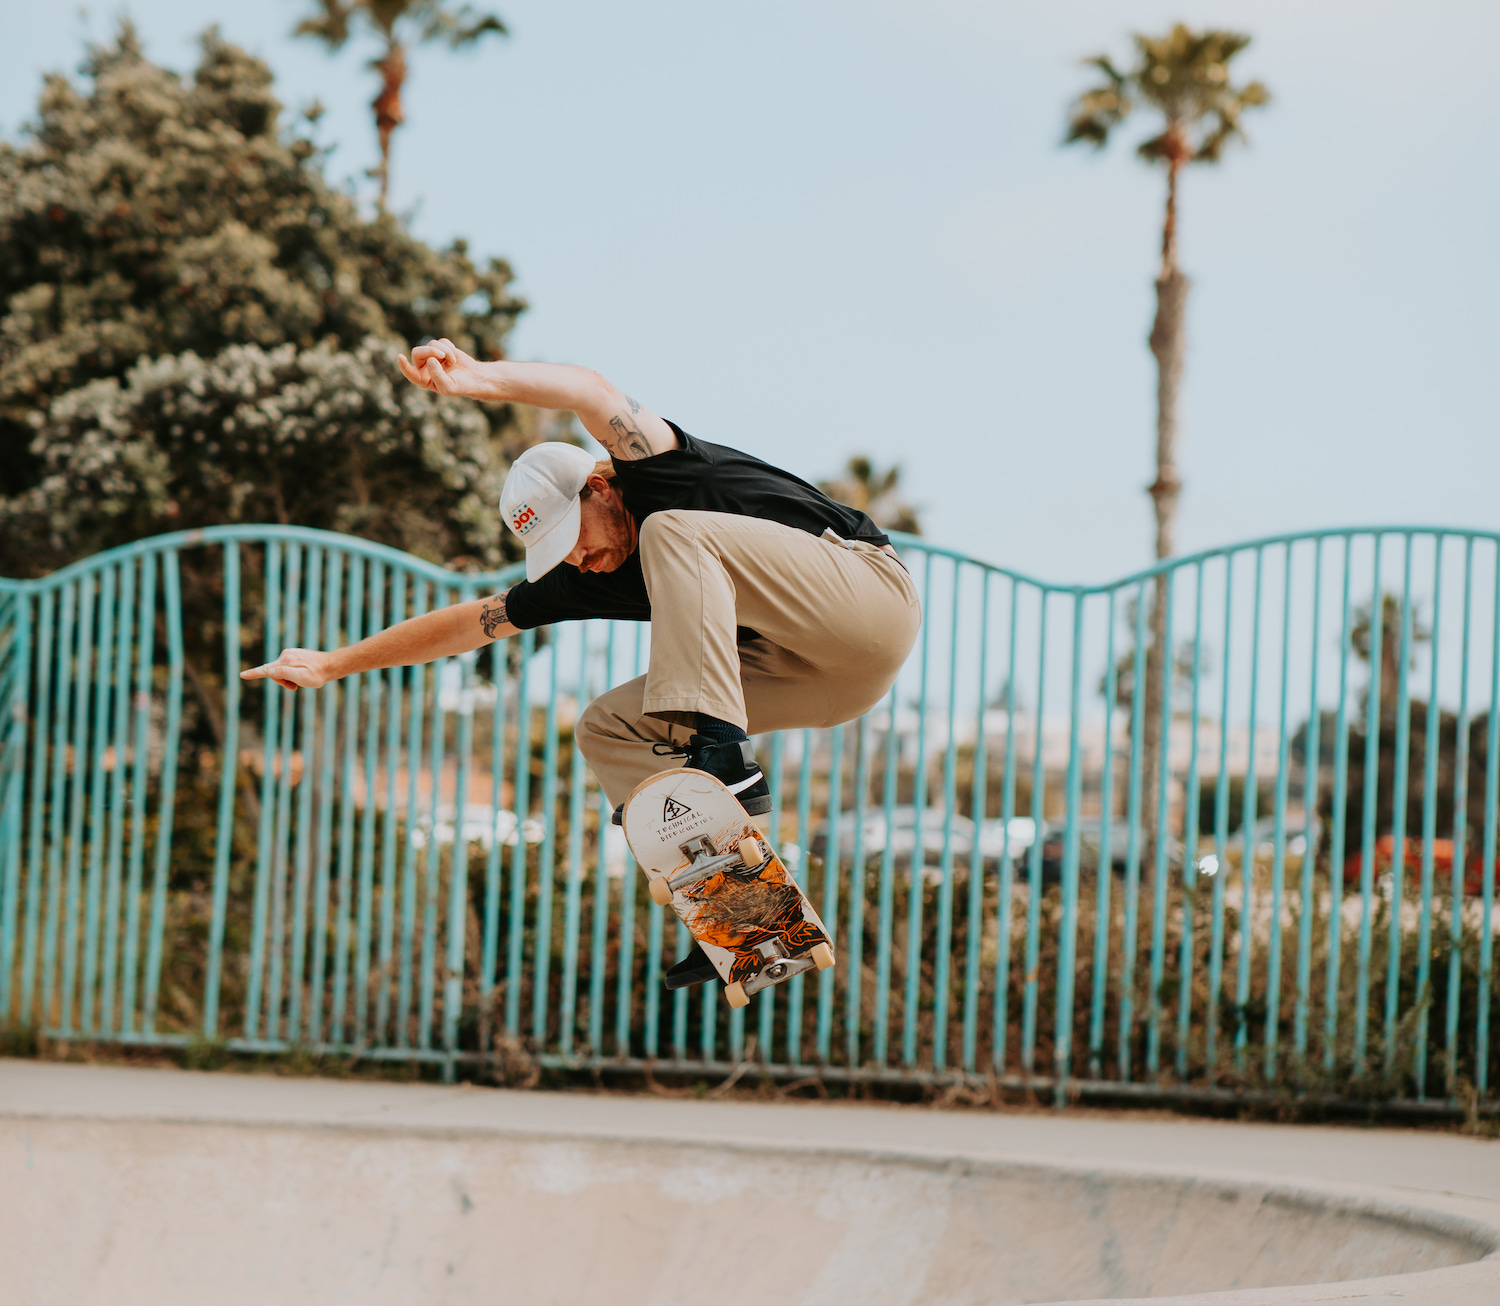 San Diego skater fashion featuring a skateboarder jumping into a bowl at Robb Field Skate Park, Ocean Beach